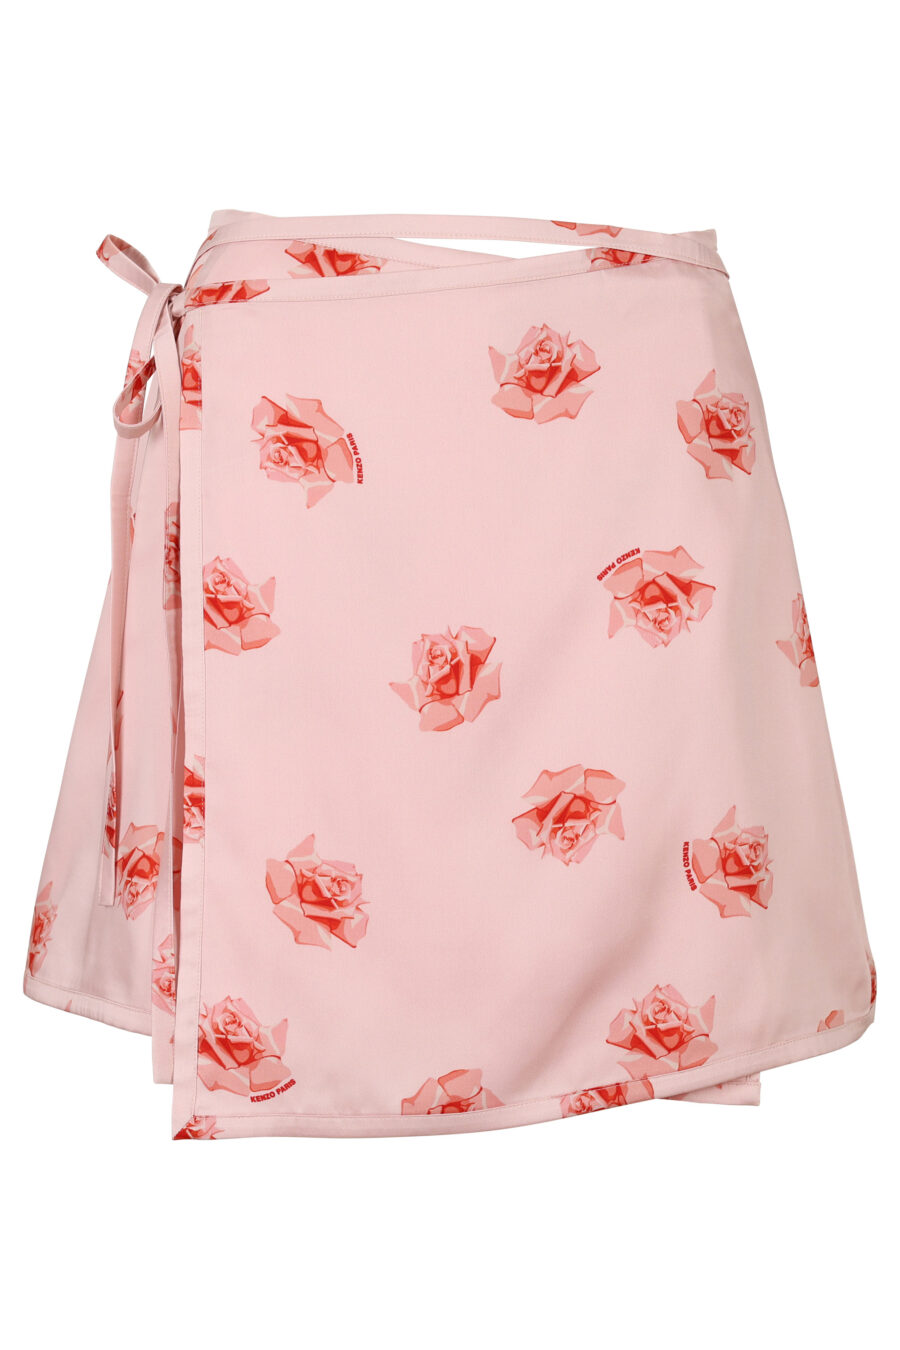 Pink skirt with "kenzo rose" print - 3612230616165